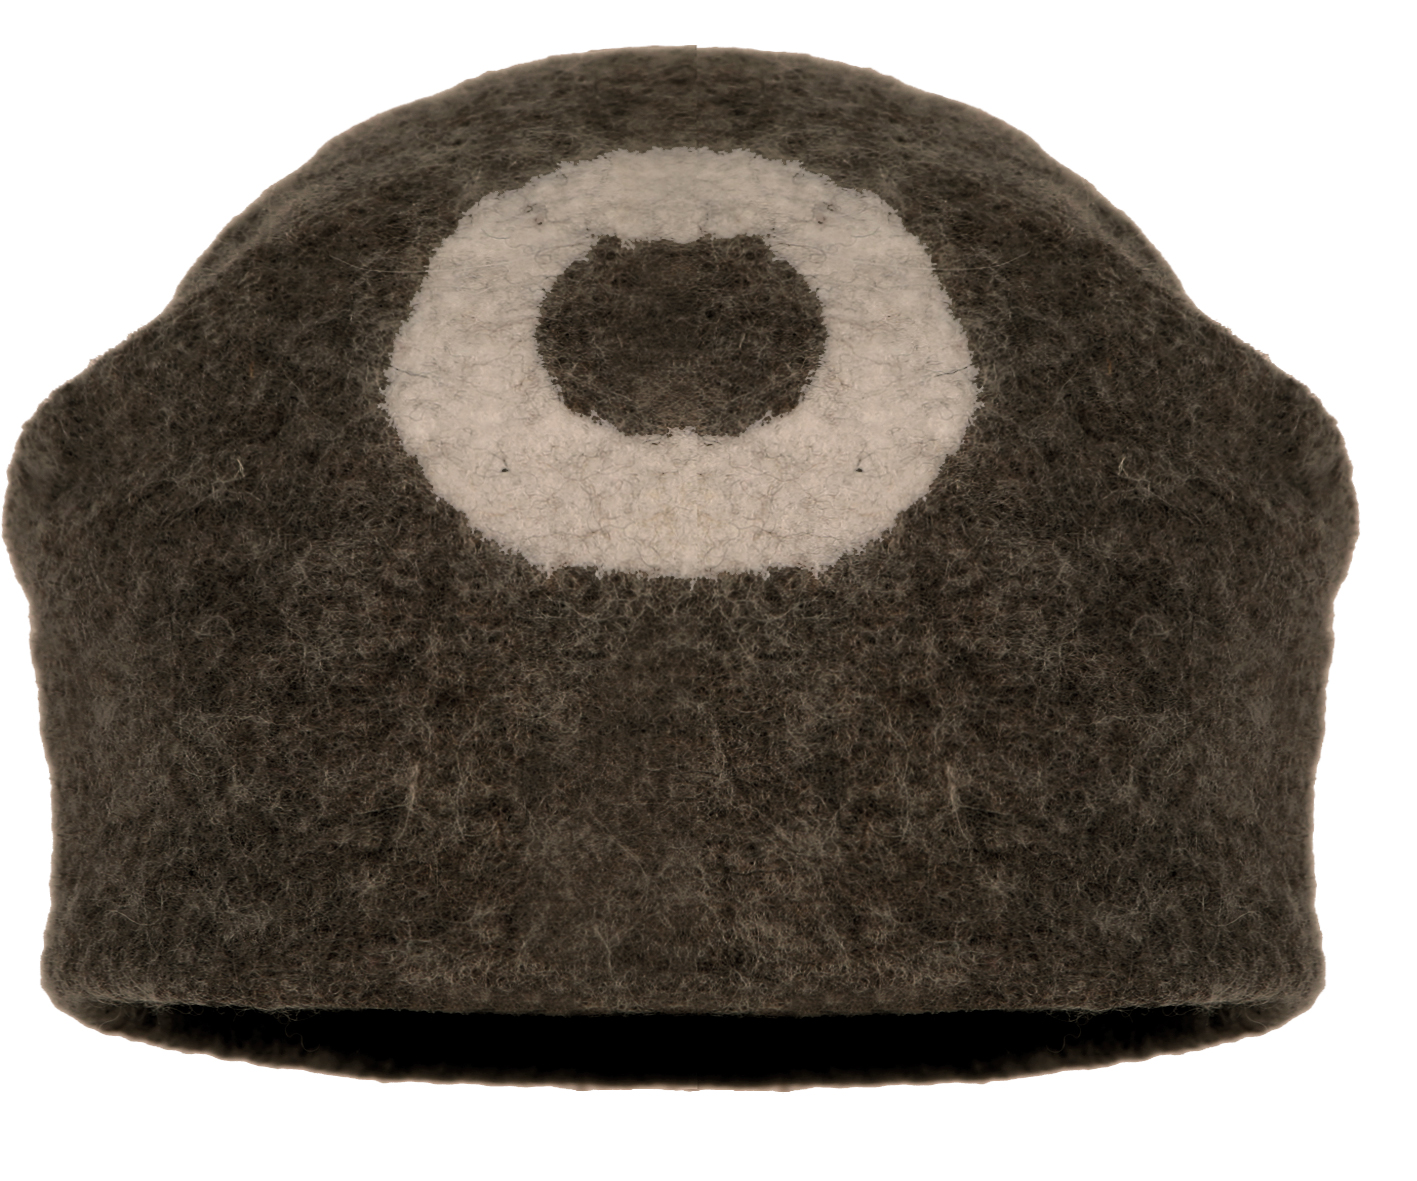 Felt Hat Handmade Brown- One Hat- undyed wool wet felted unisex hat. Handmade in Ireland from Superfine Merino Wool with One Circle Detail.